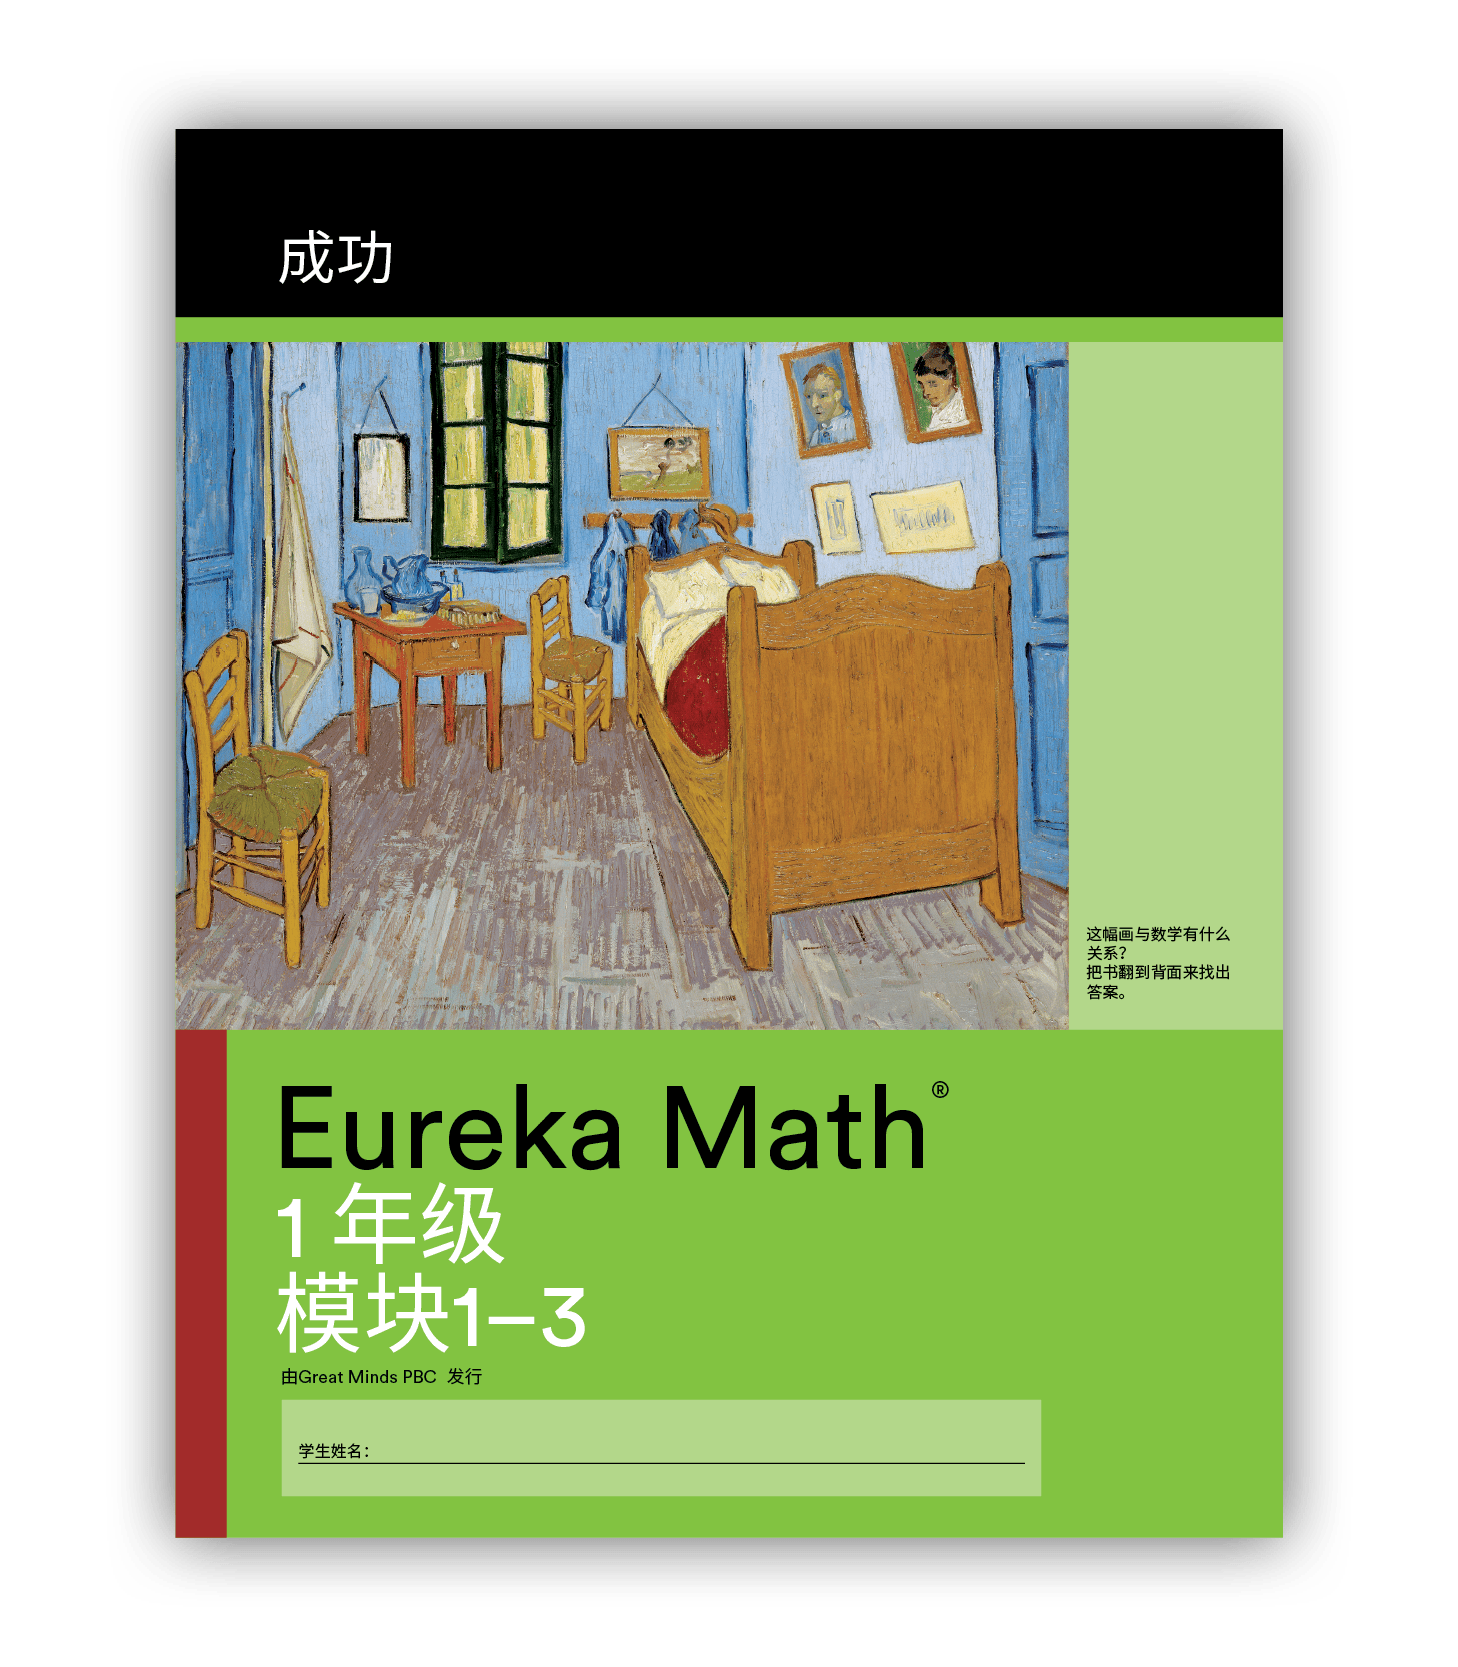 Eureka Math Succeed Book in Mandarin for Grade 1